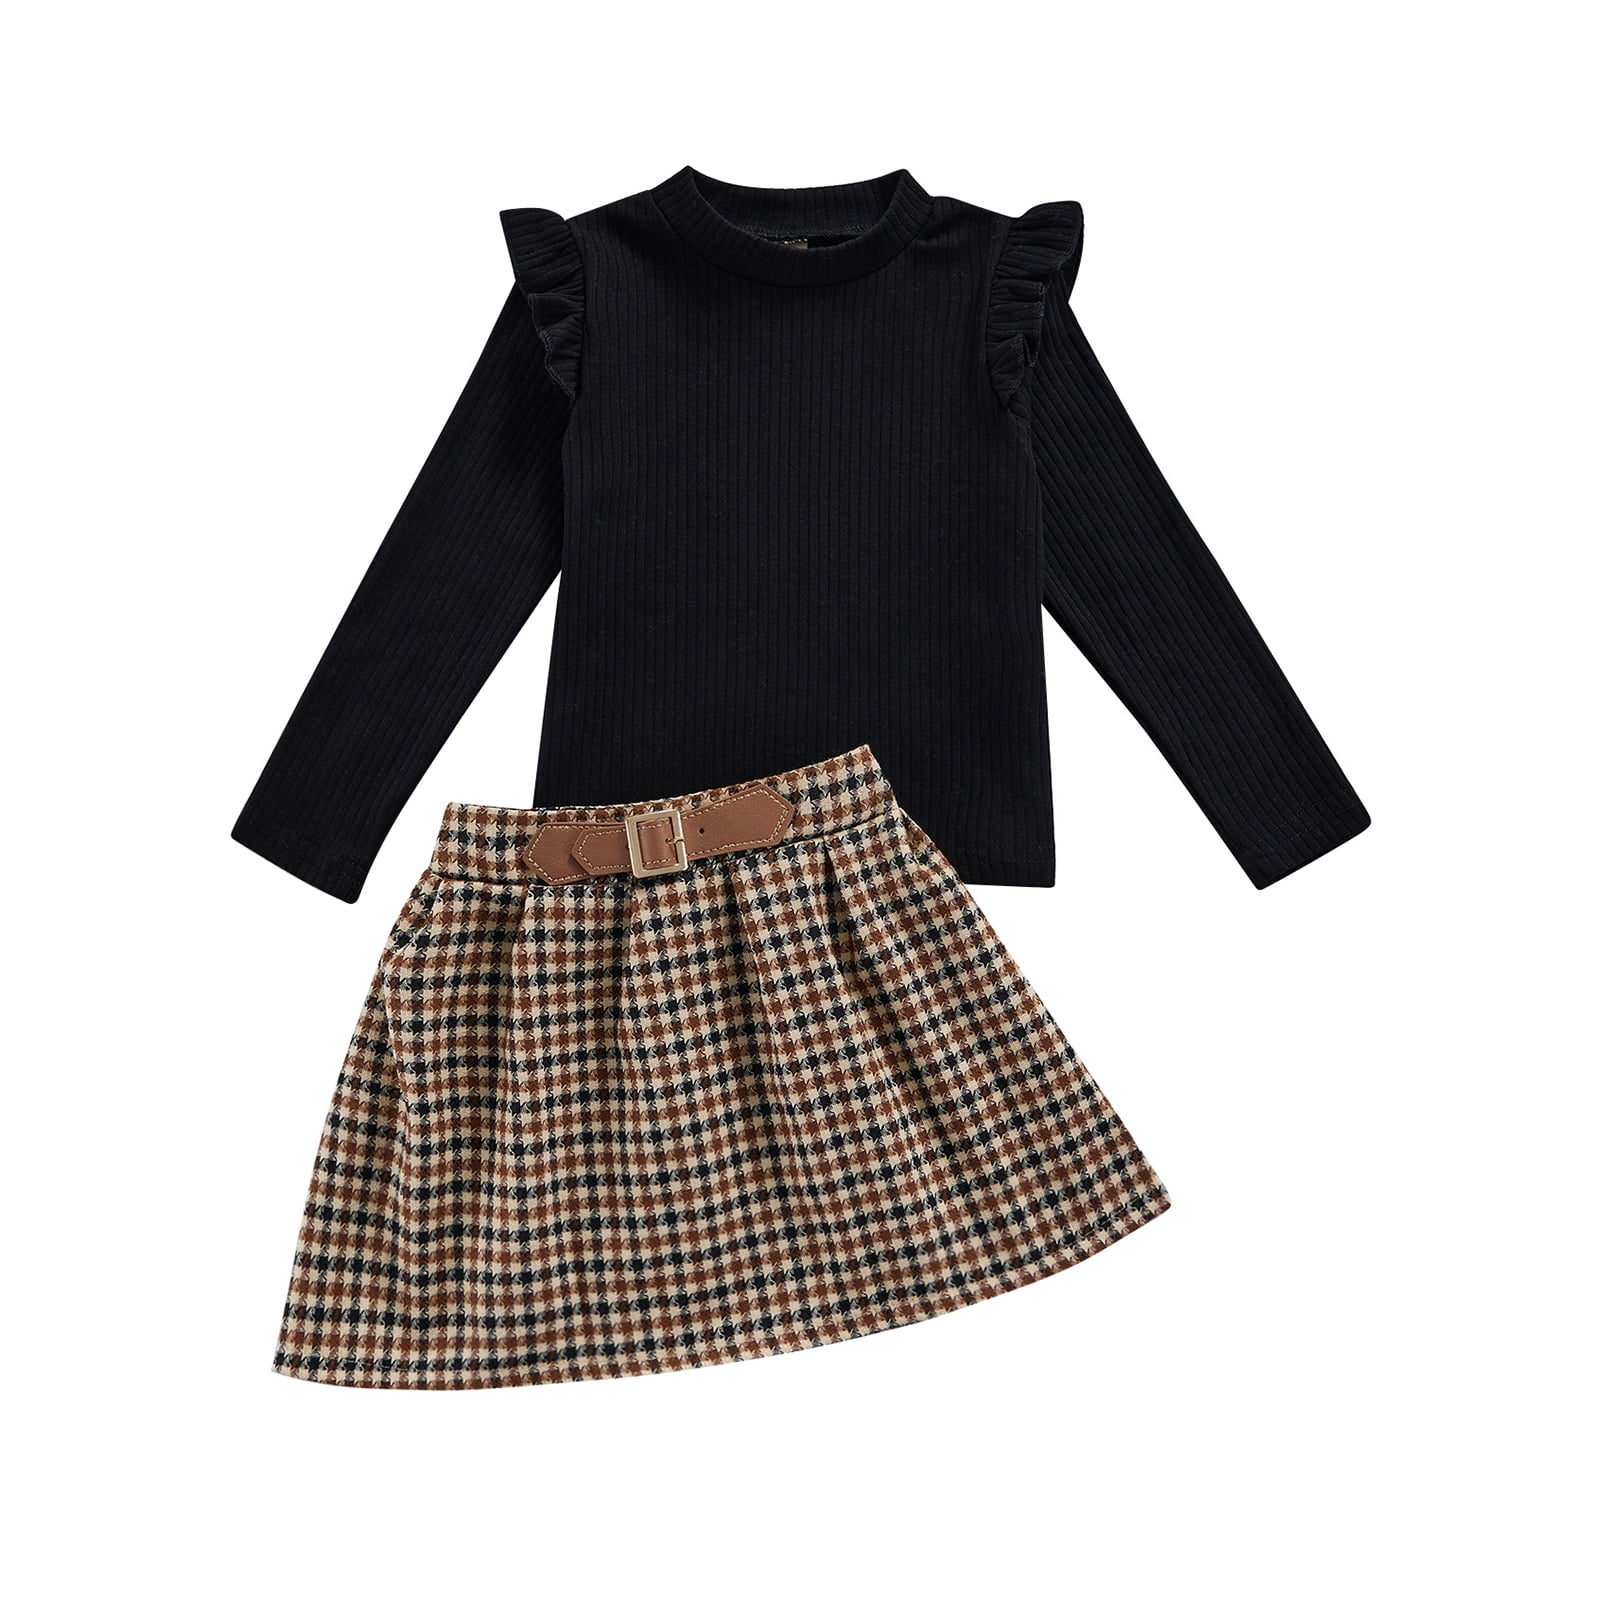 Imcute Girls Skirt Set High-neck Knit Ruffled Long-sleeved Tops Plaid ...